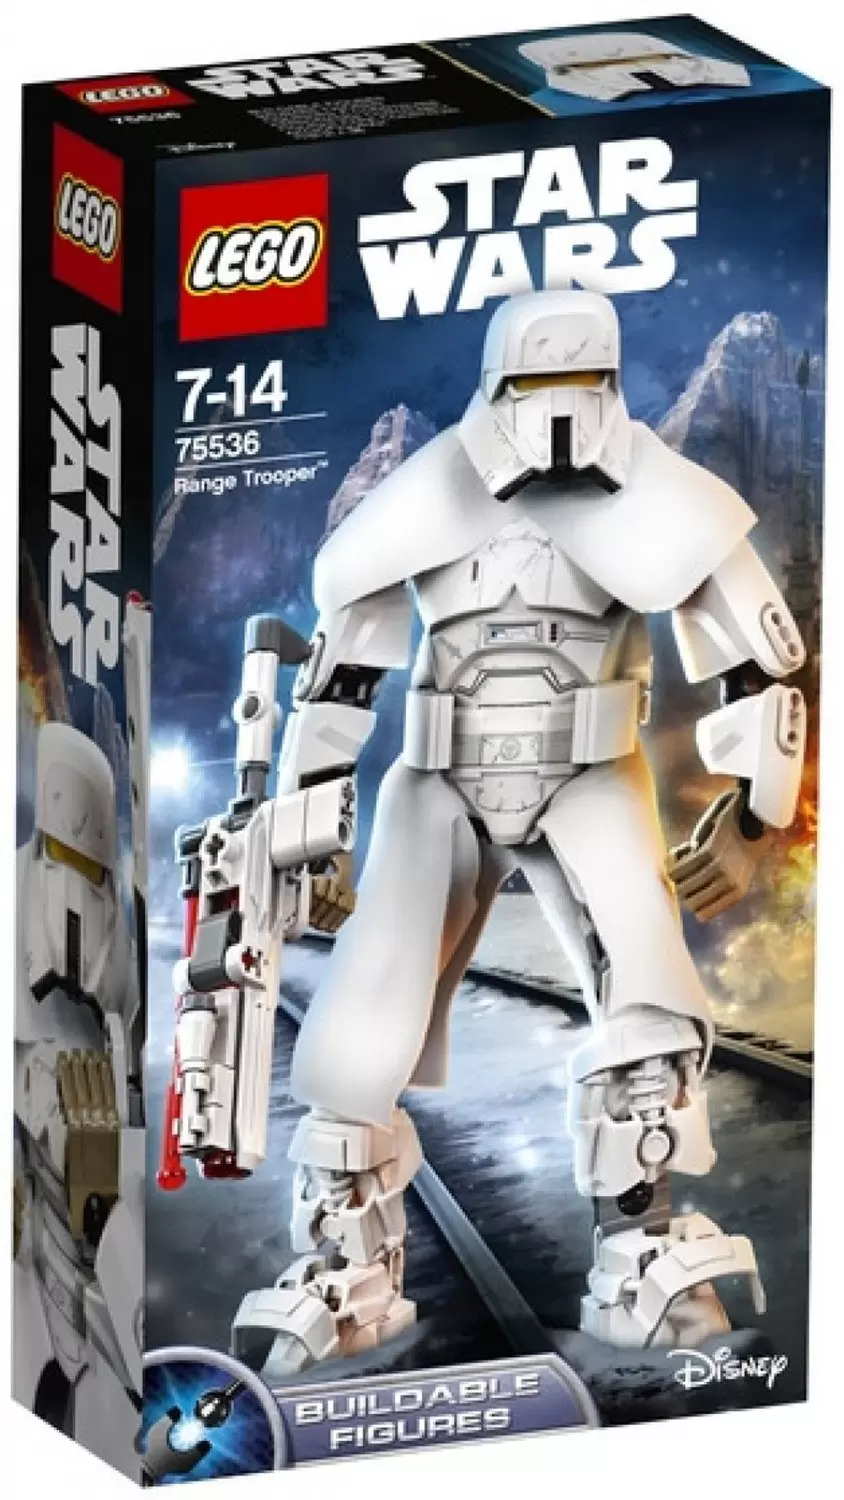 LEGO Star Wars - Range Trooper Buildable Figure